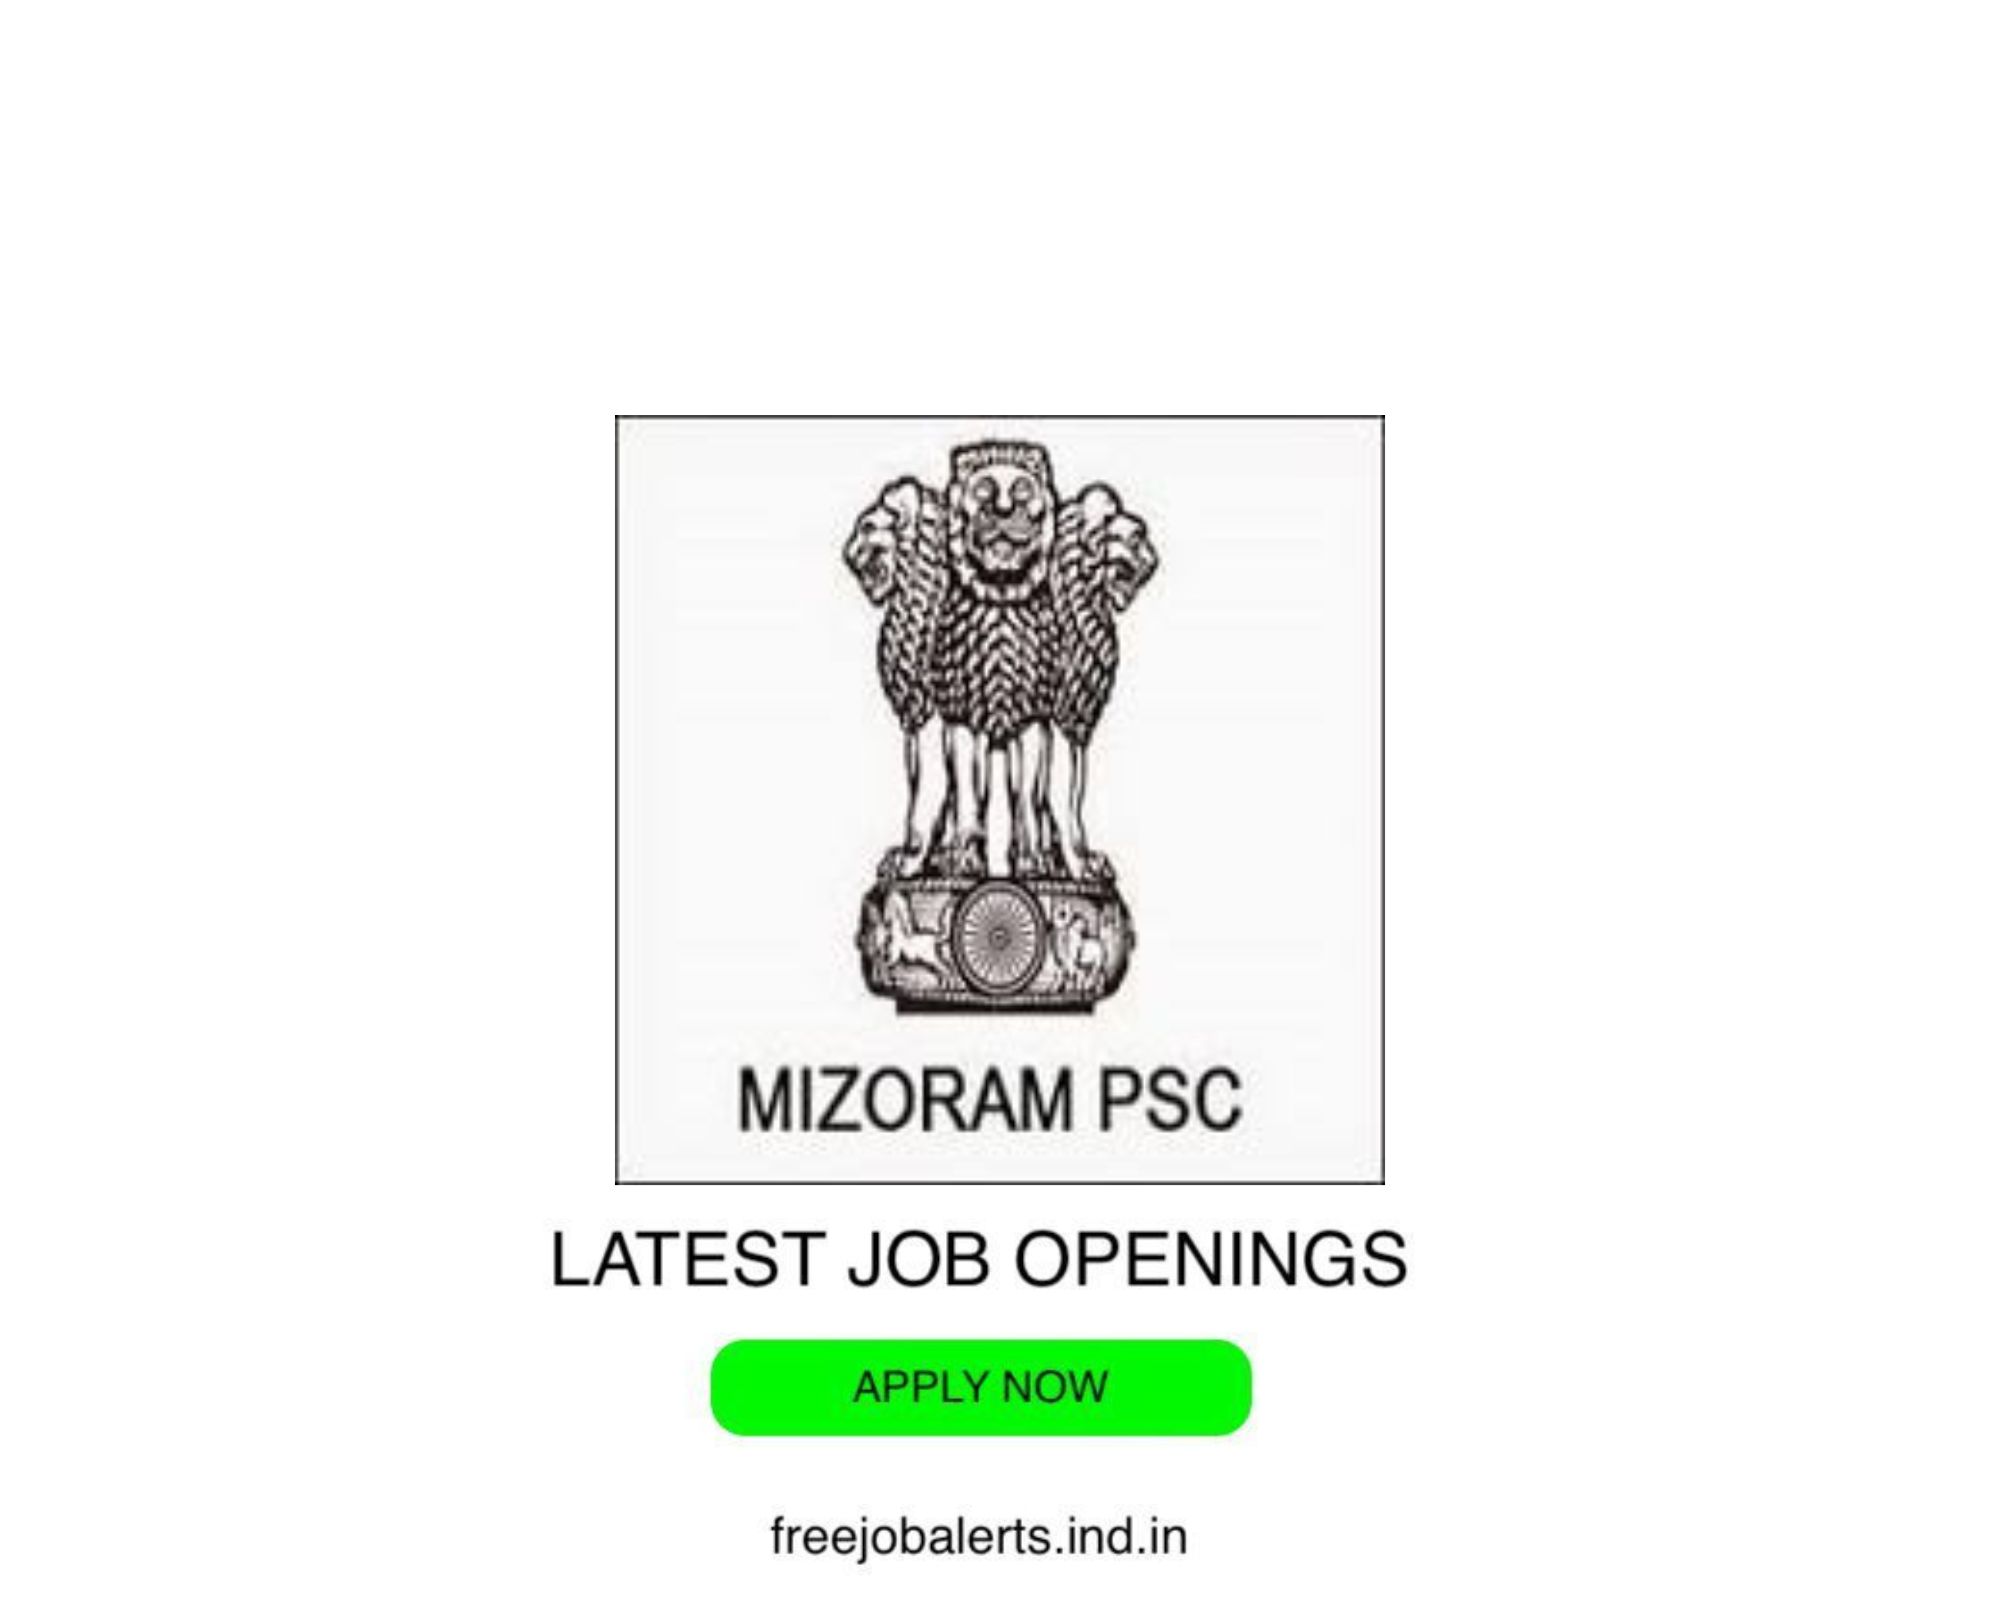 Mizoram Public Service Commission- Latest Govt job openings - Free job alerts, Indian Govt Jobs